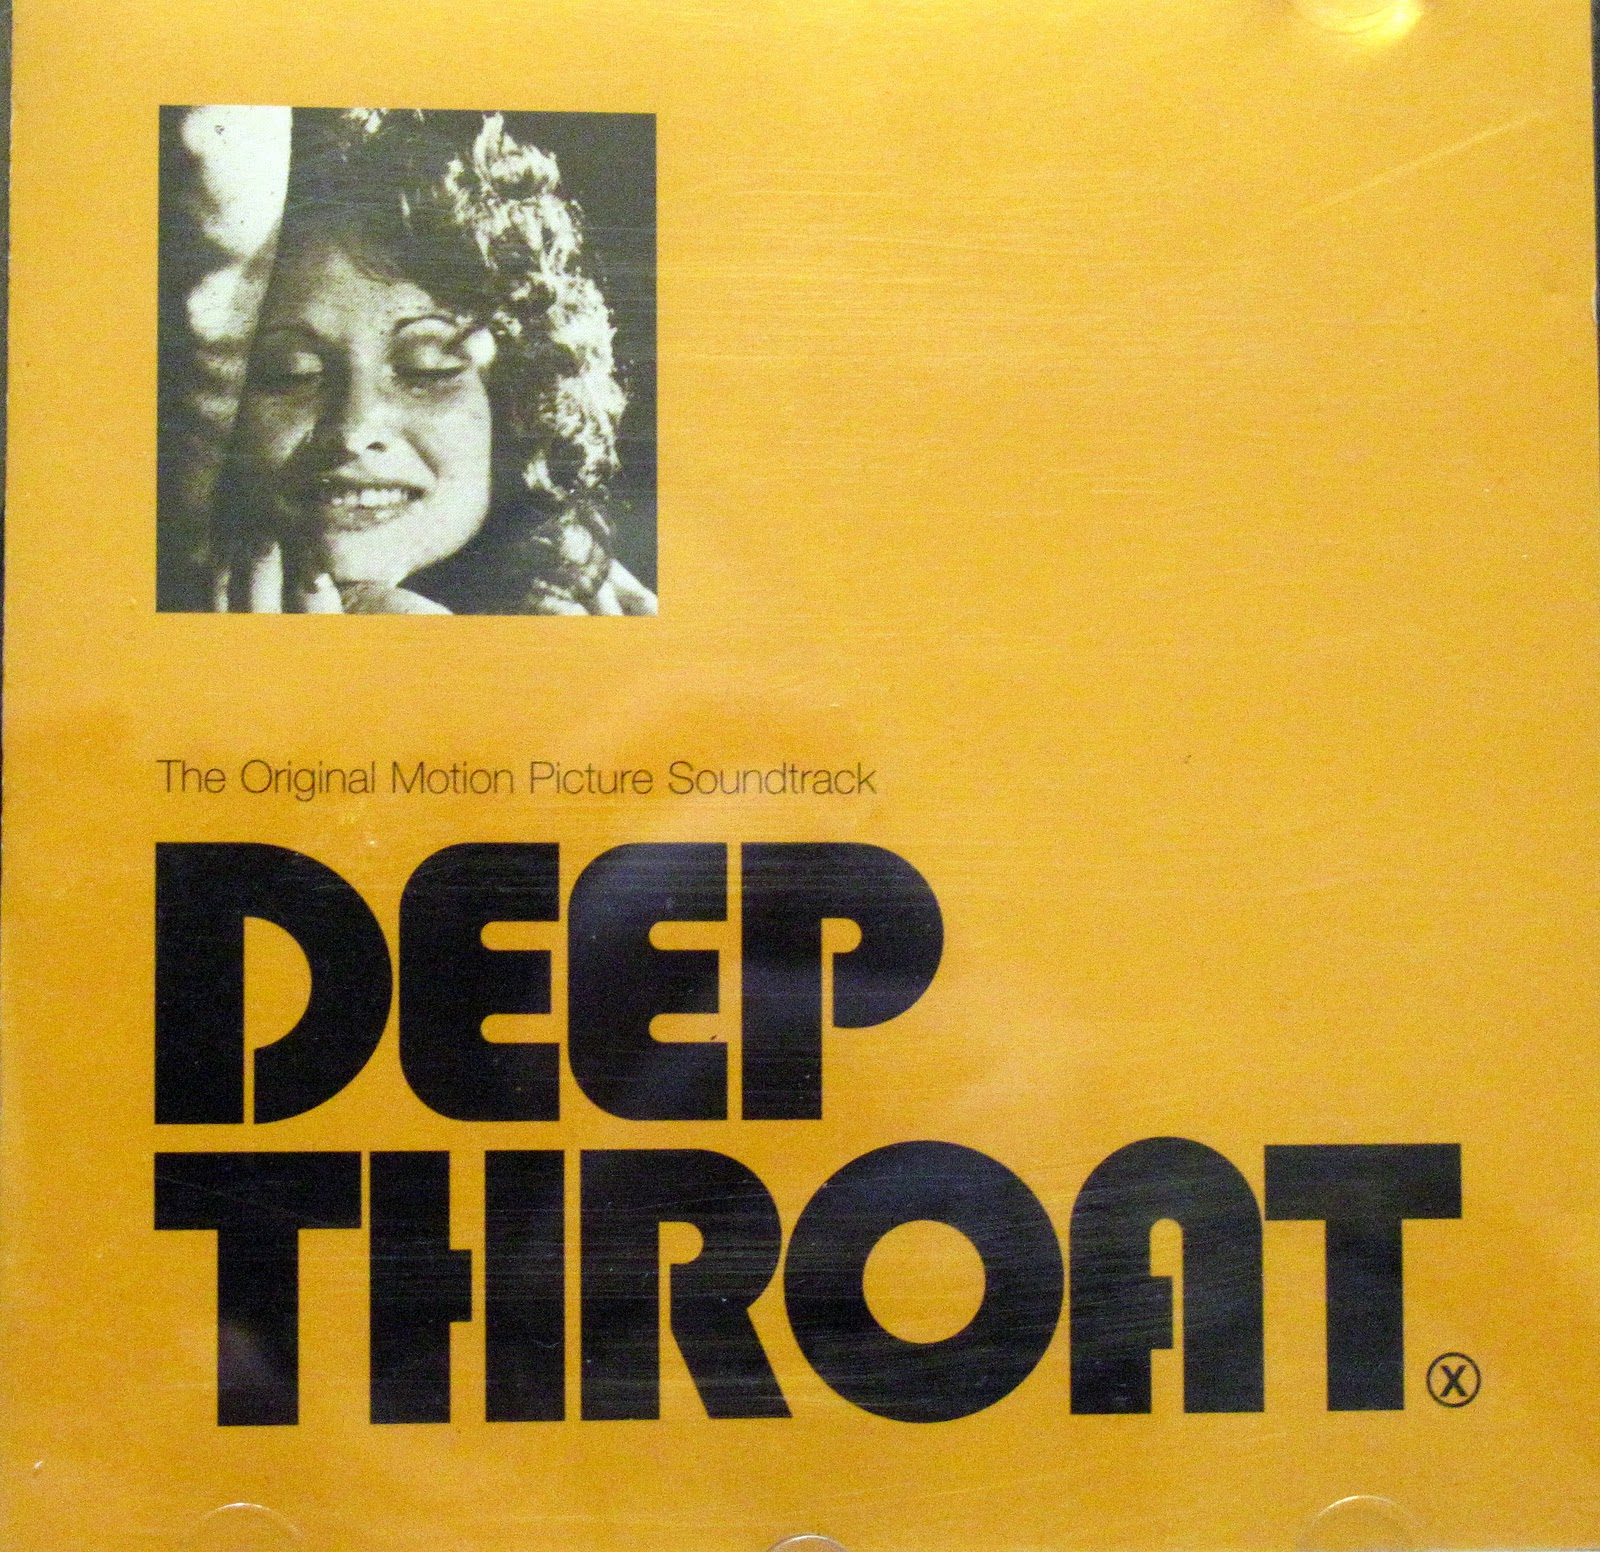 Deep throat anthology